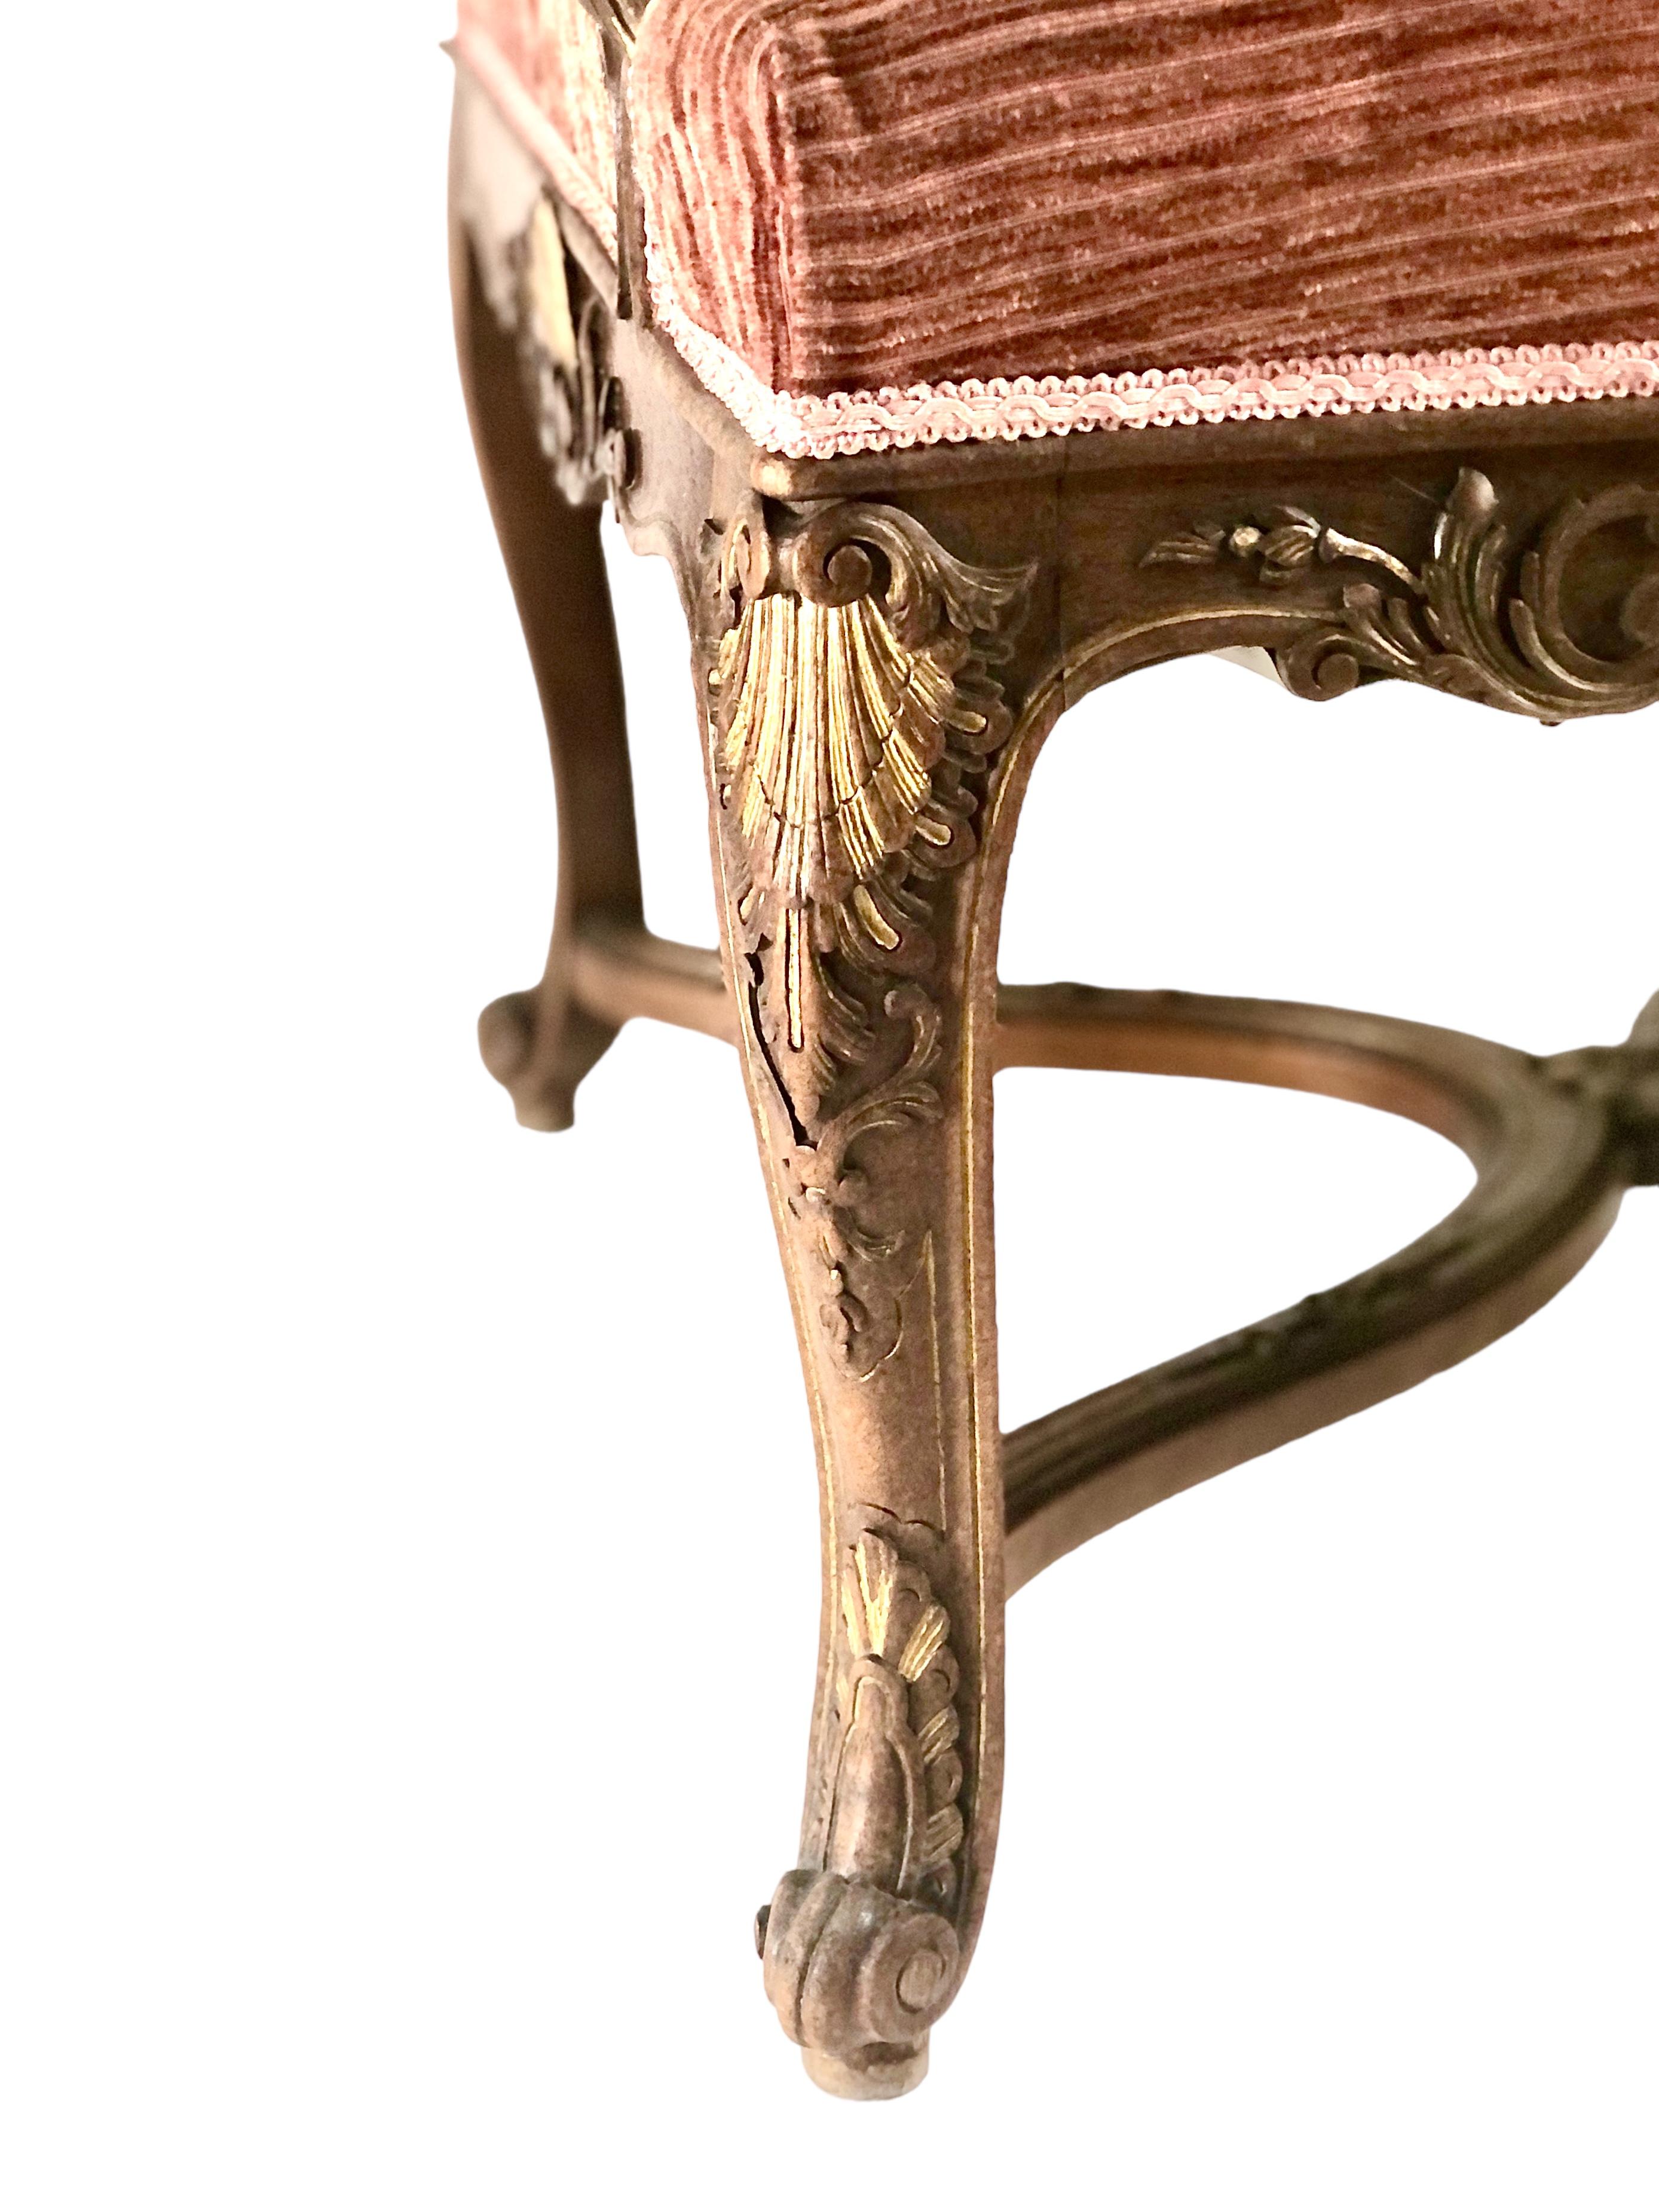 19th Century Pair of Walnut Regency Chairs Called “Fauteuils à La Reine” For Sale 12